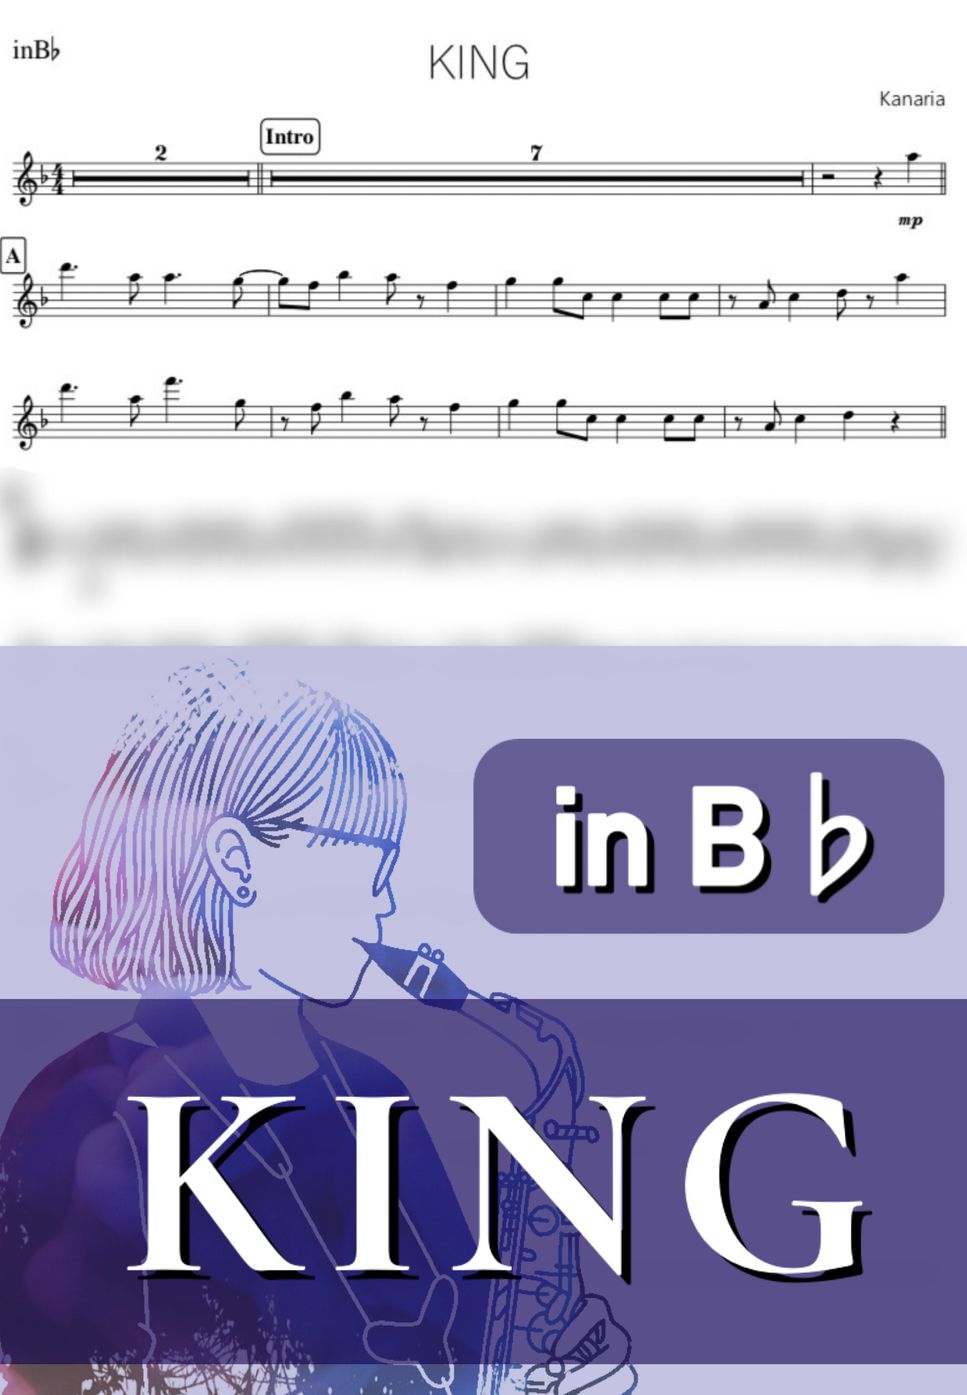 Kanaria - KING (B♭) by kanamusic